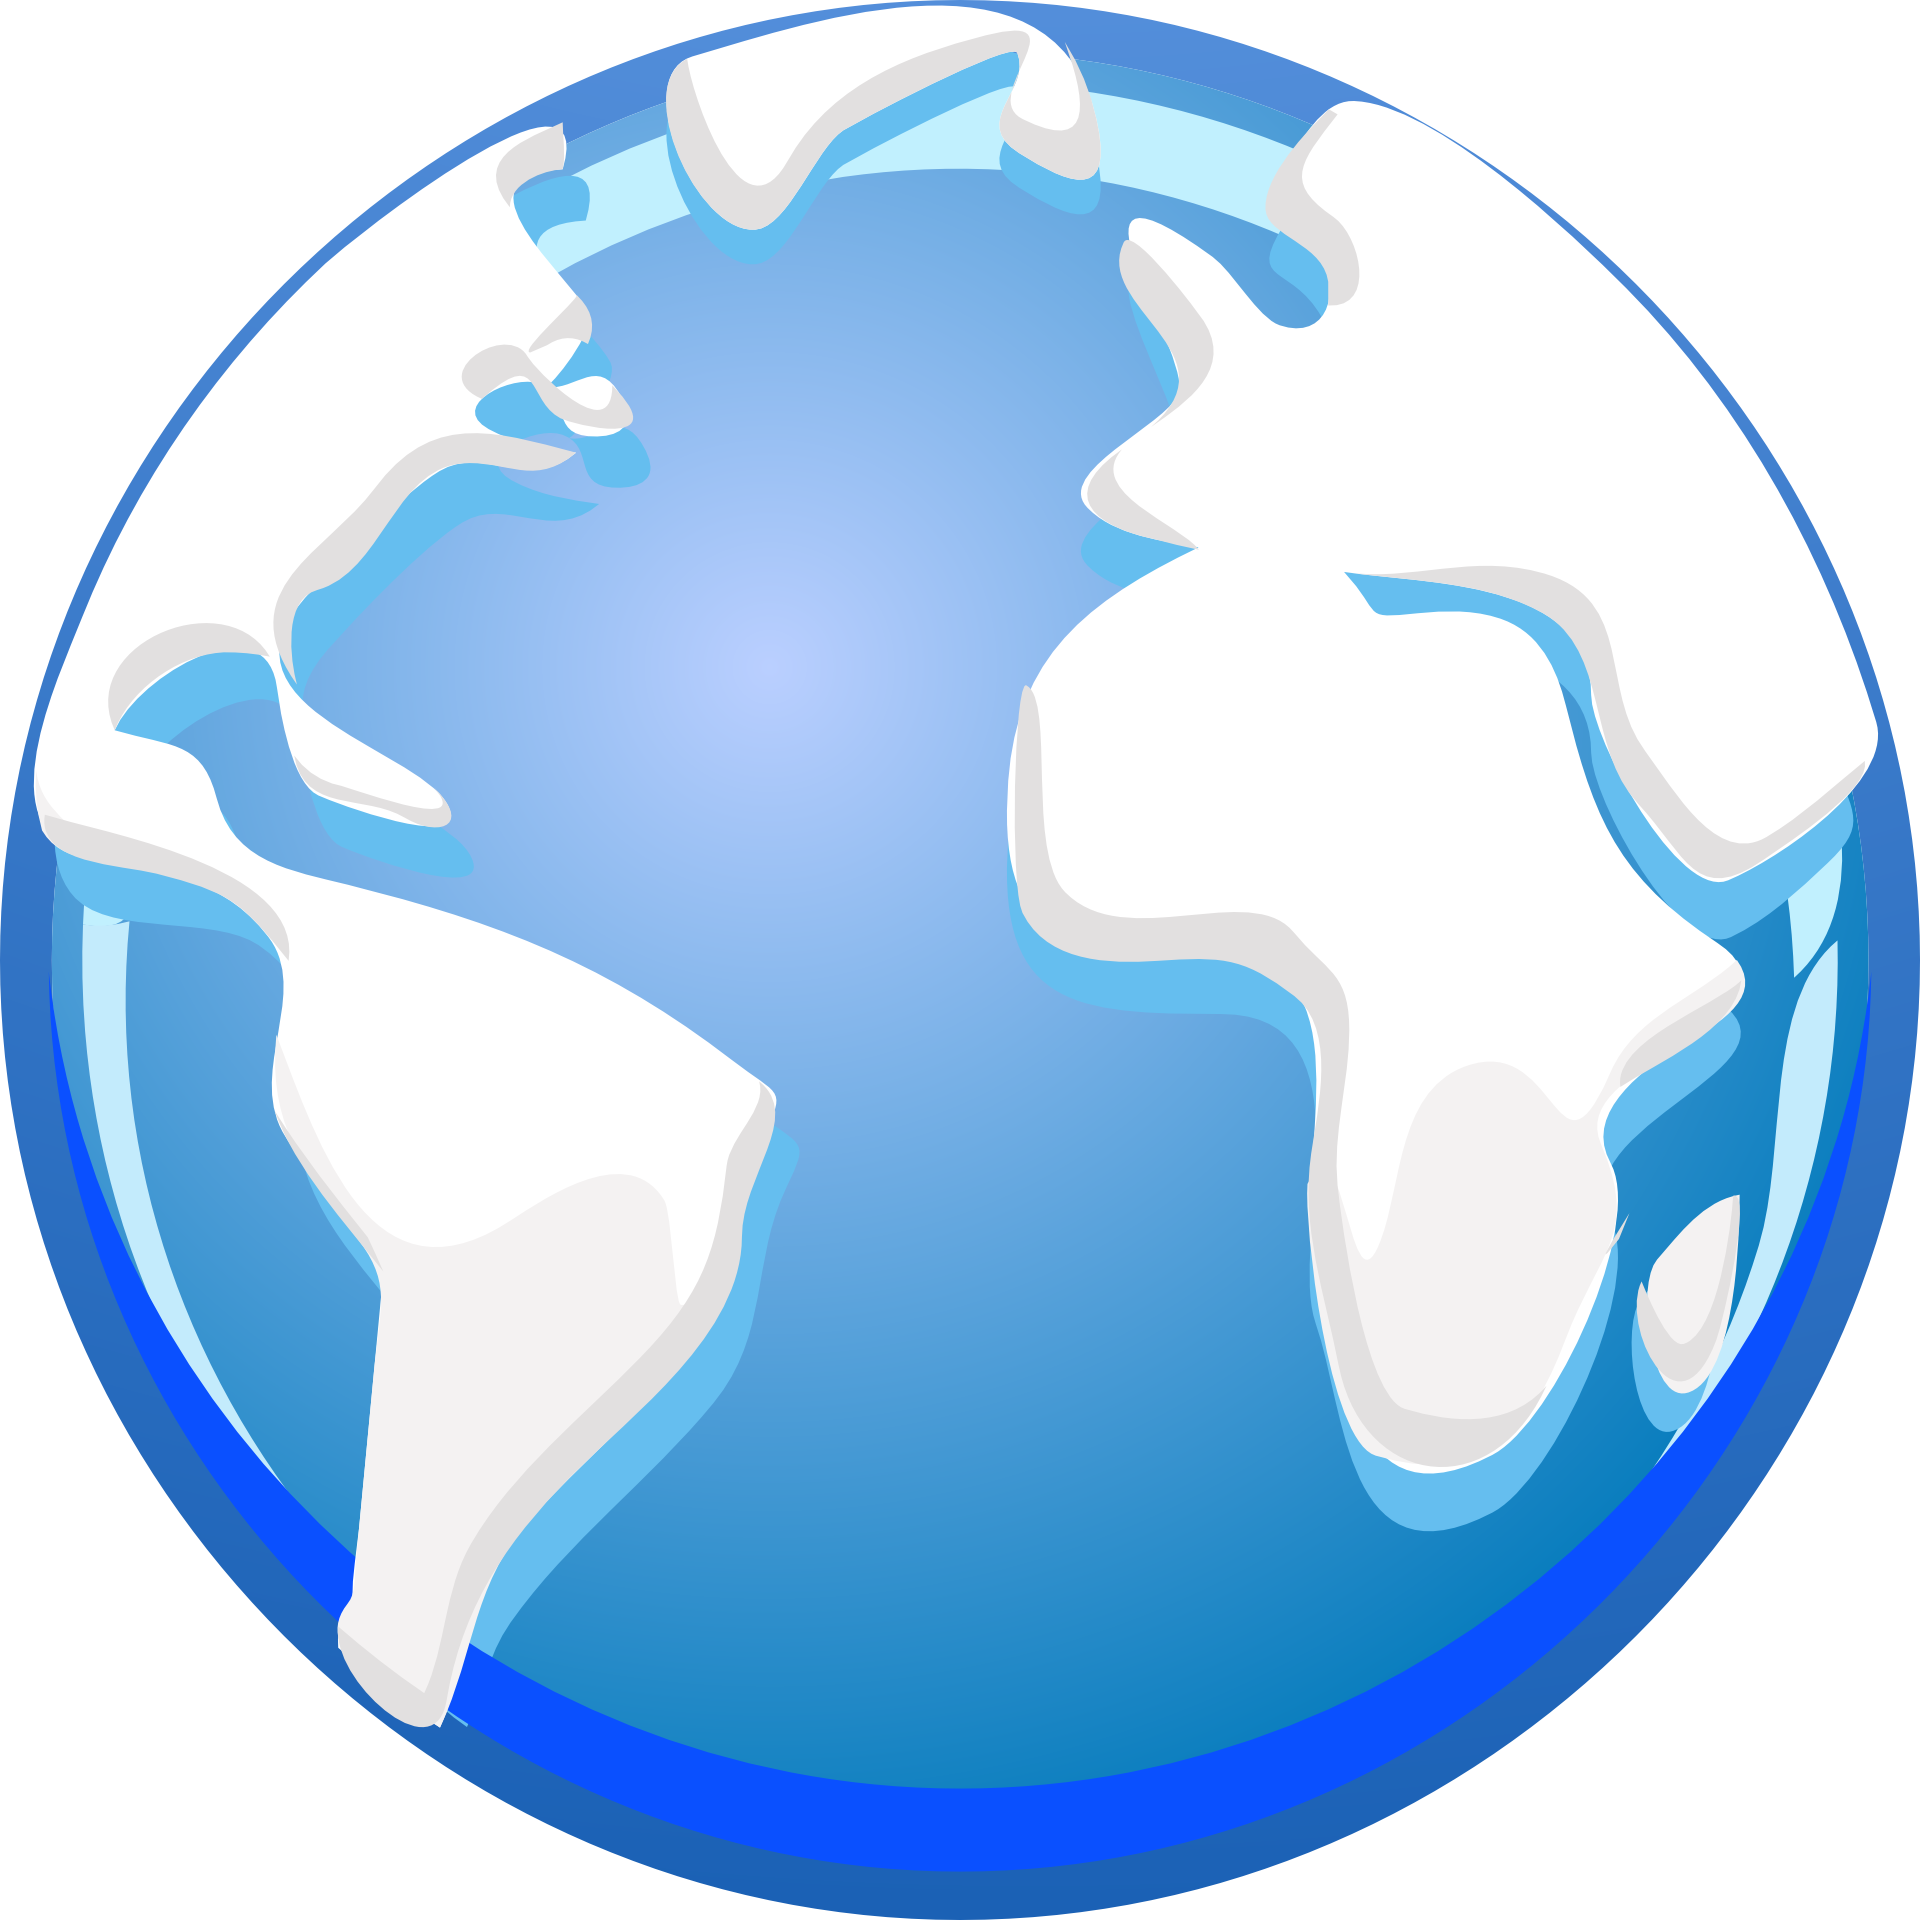 clipart earth world wide web